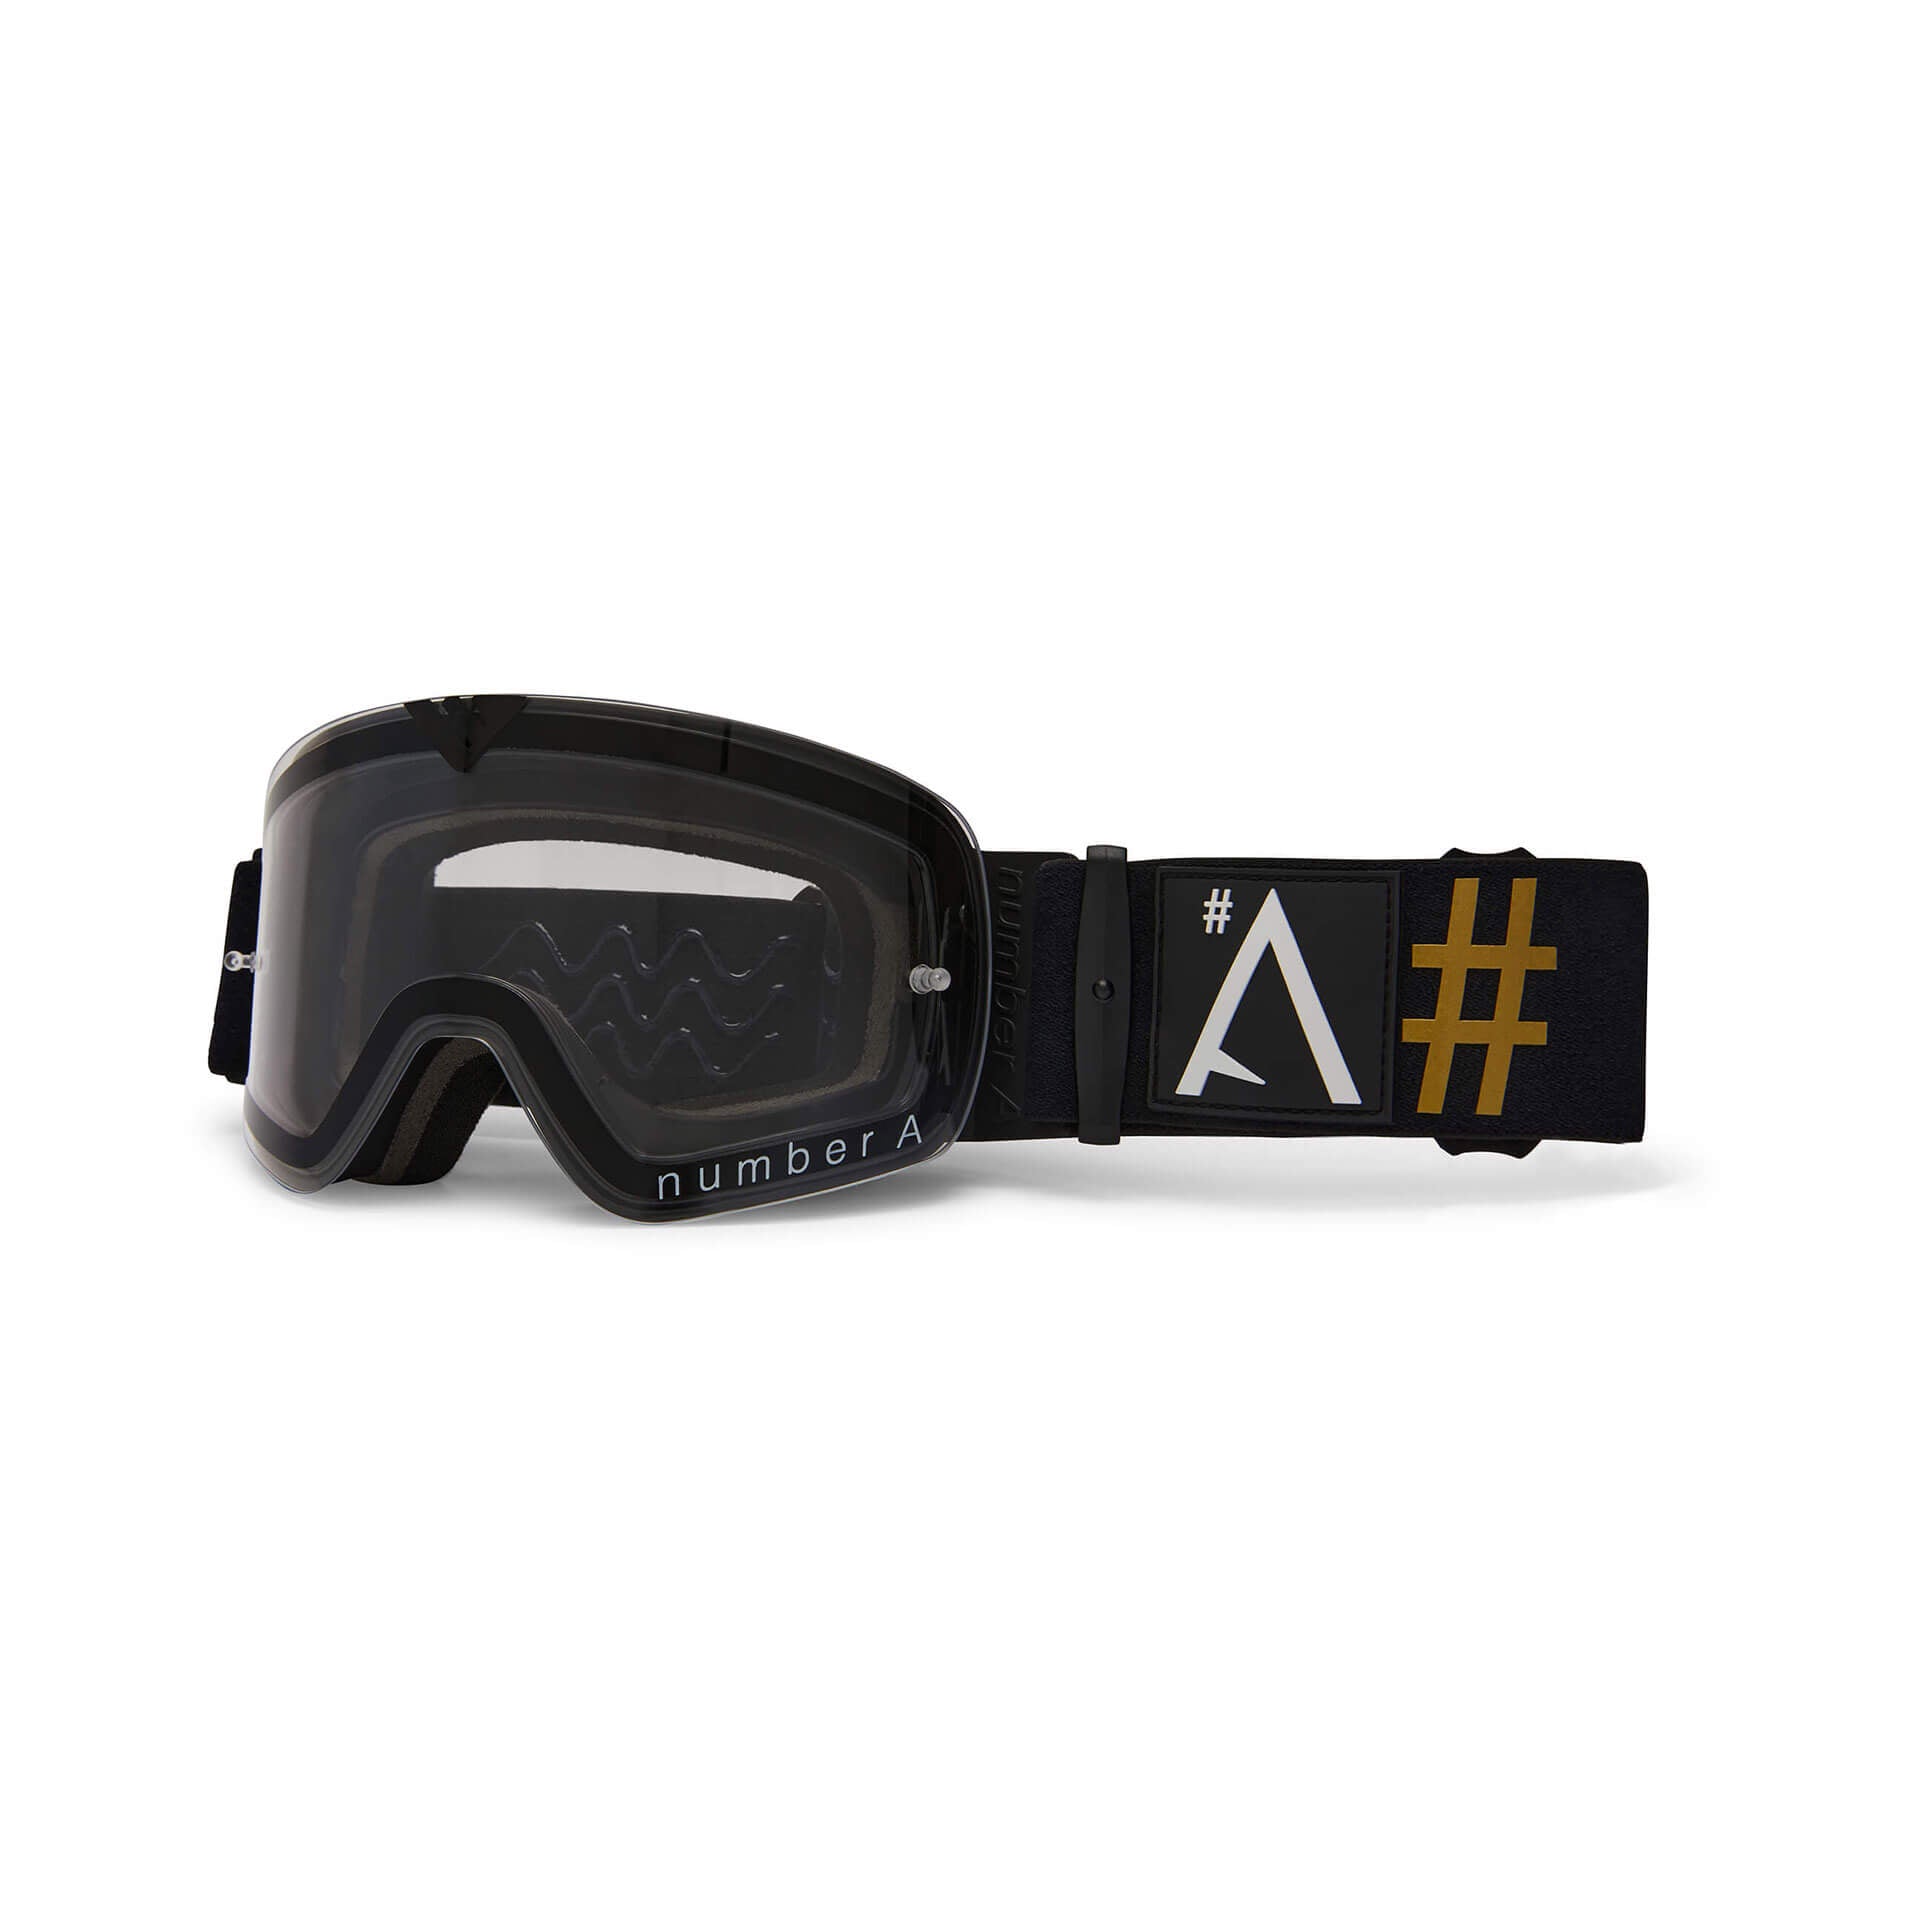 Number A Stato Goggles clear mirror lens black & gold strap cycling eyewear mtb biking goggles